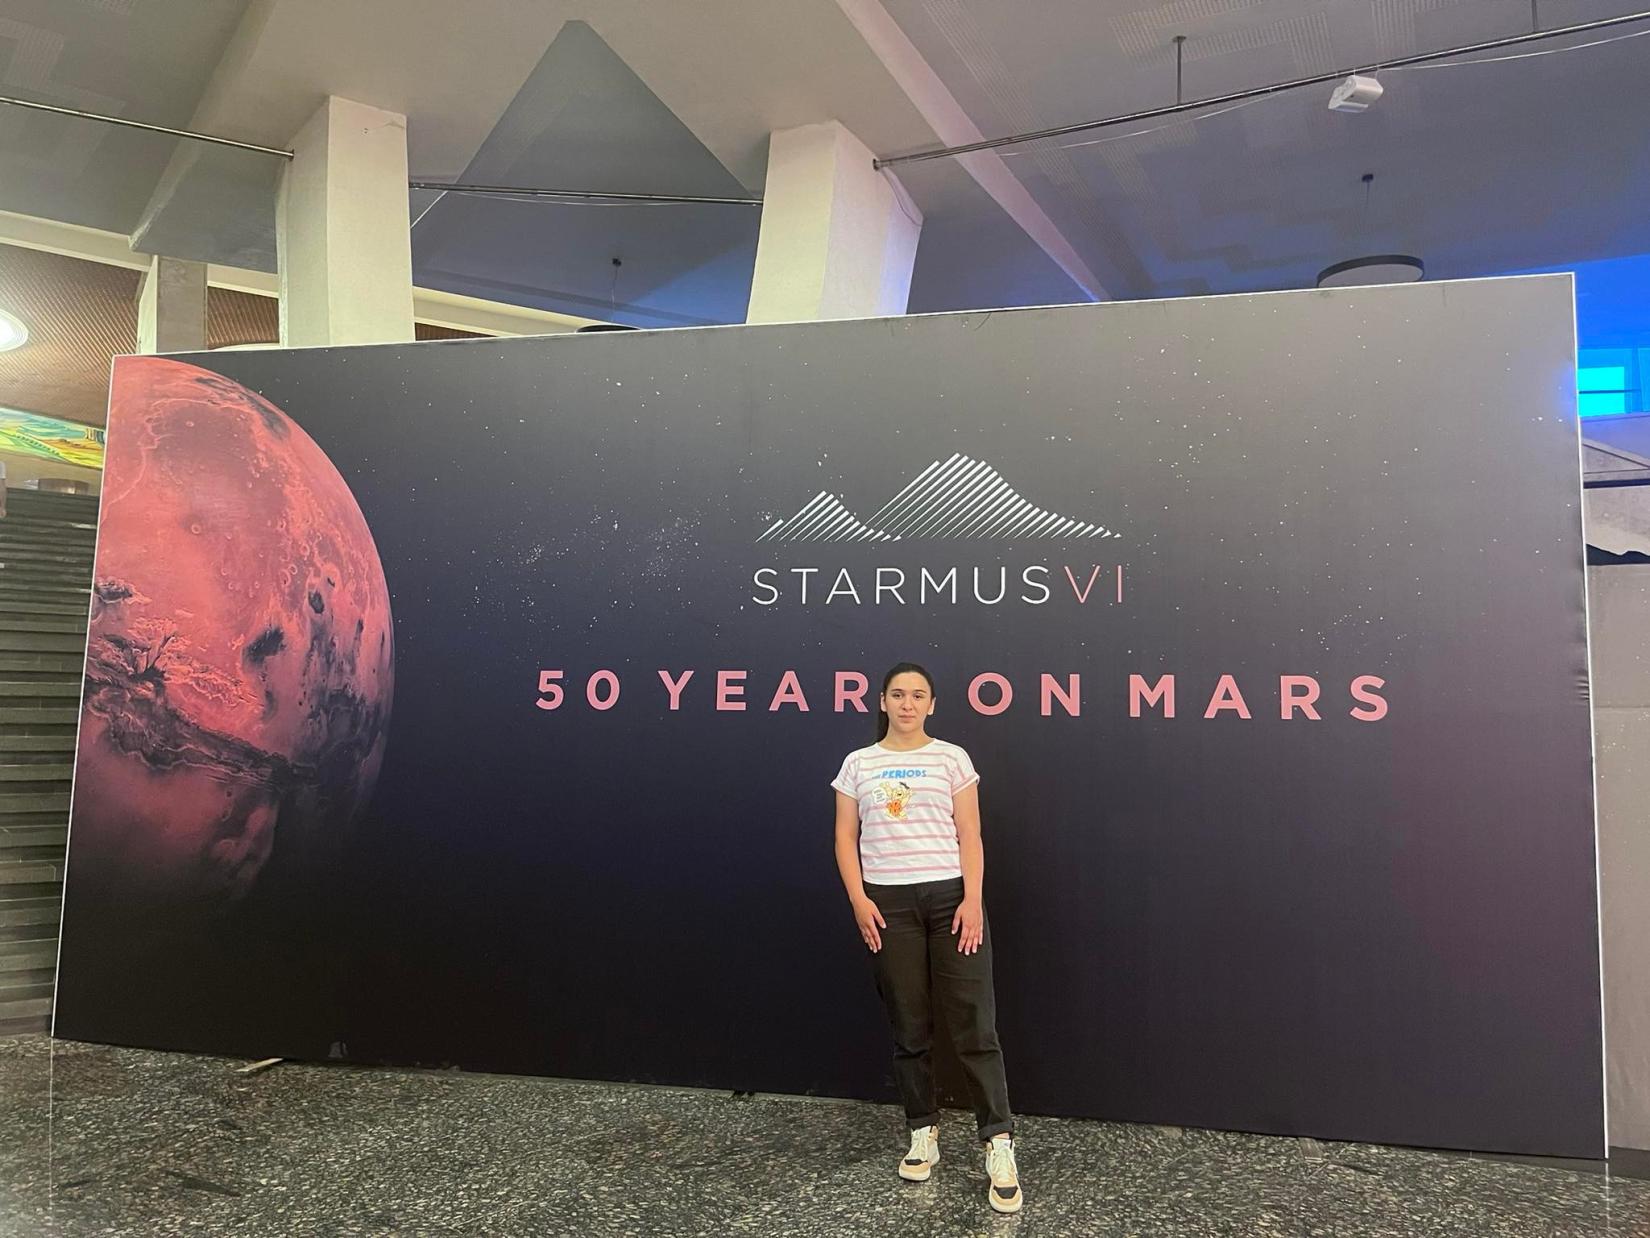 A teenager standing next to the STARMUS VI Armenia festival poster.